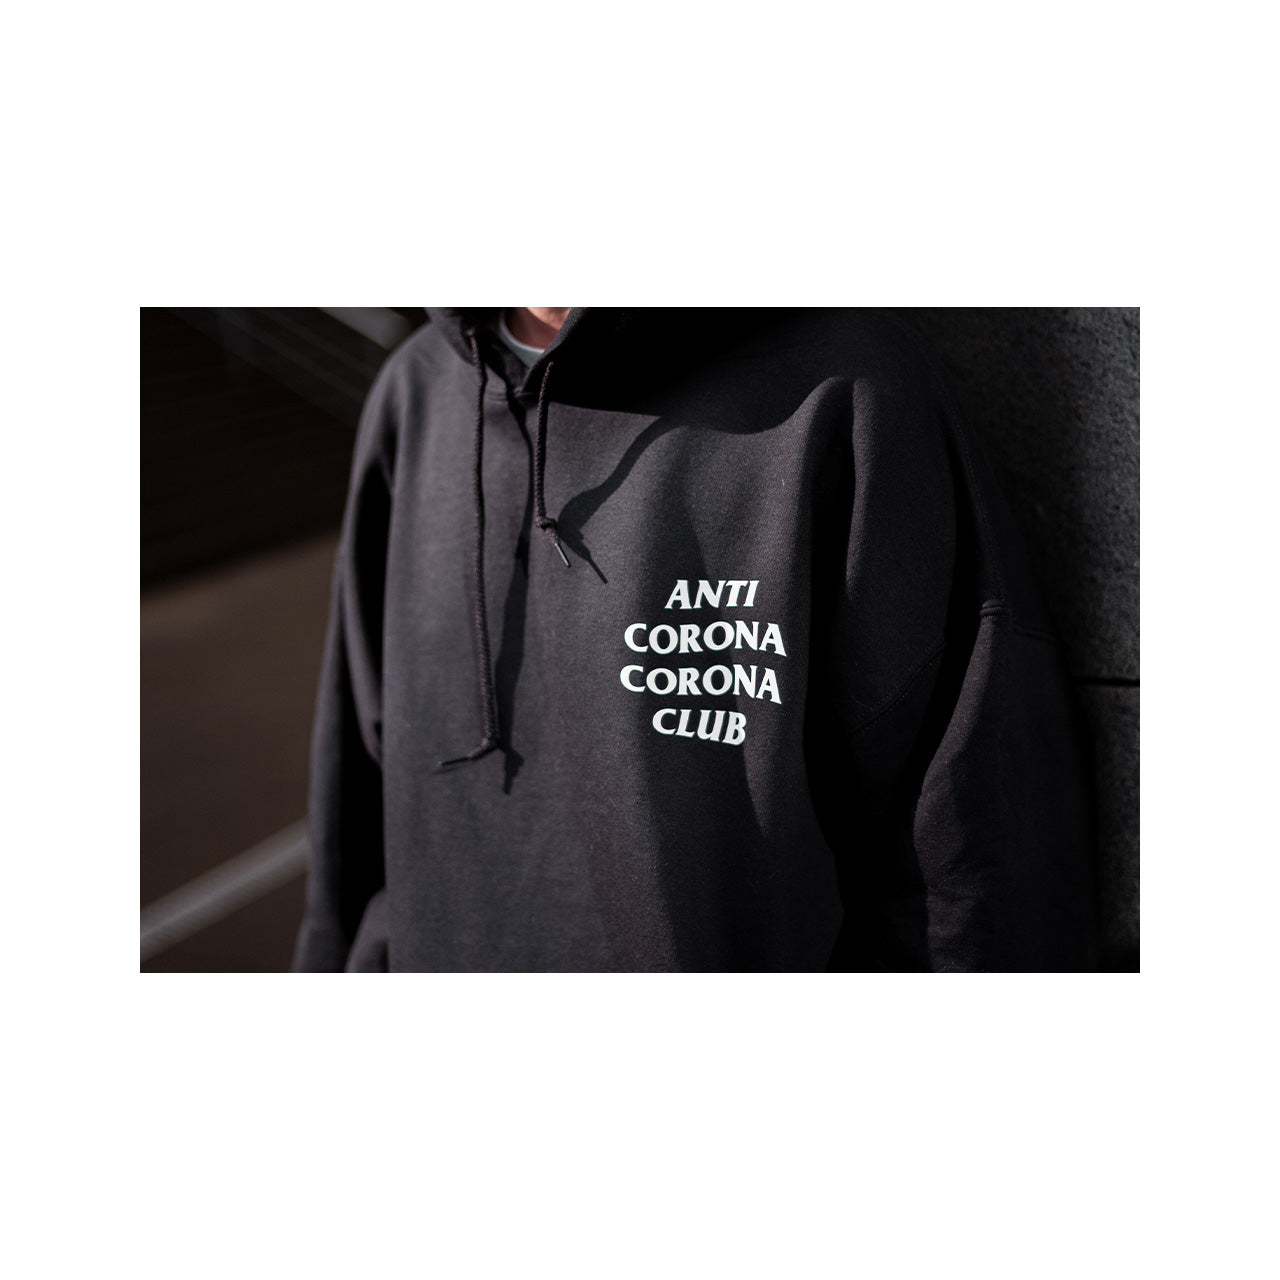 Snash - Anti Corona Corona Club Hoodie